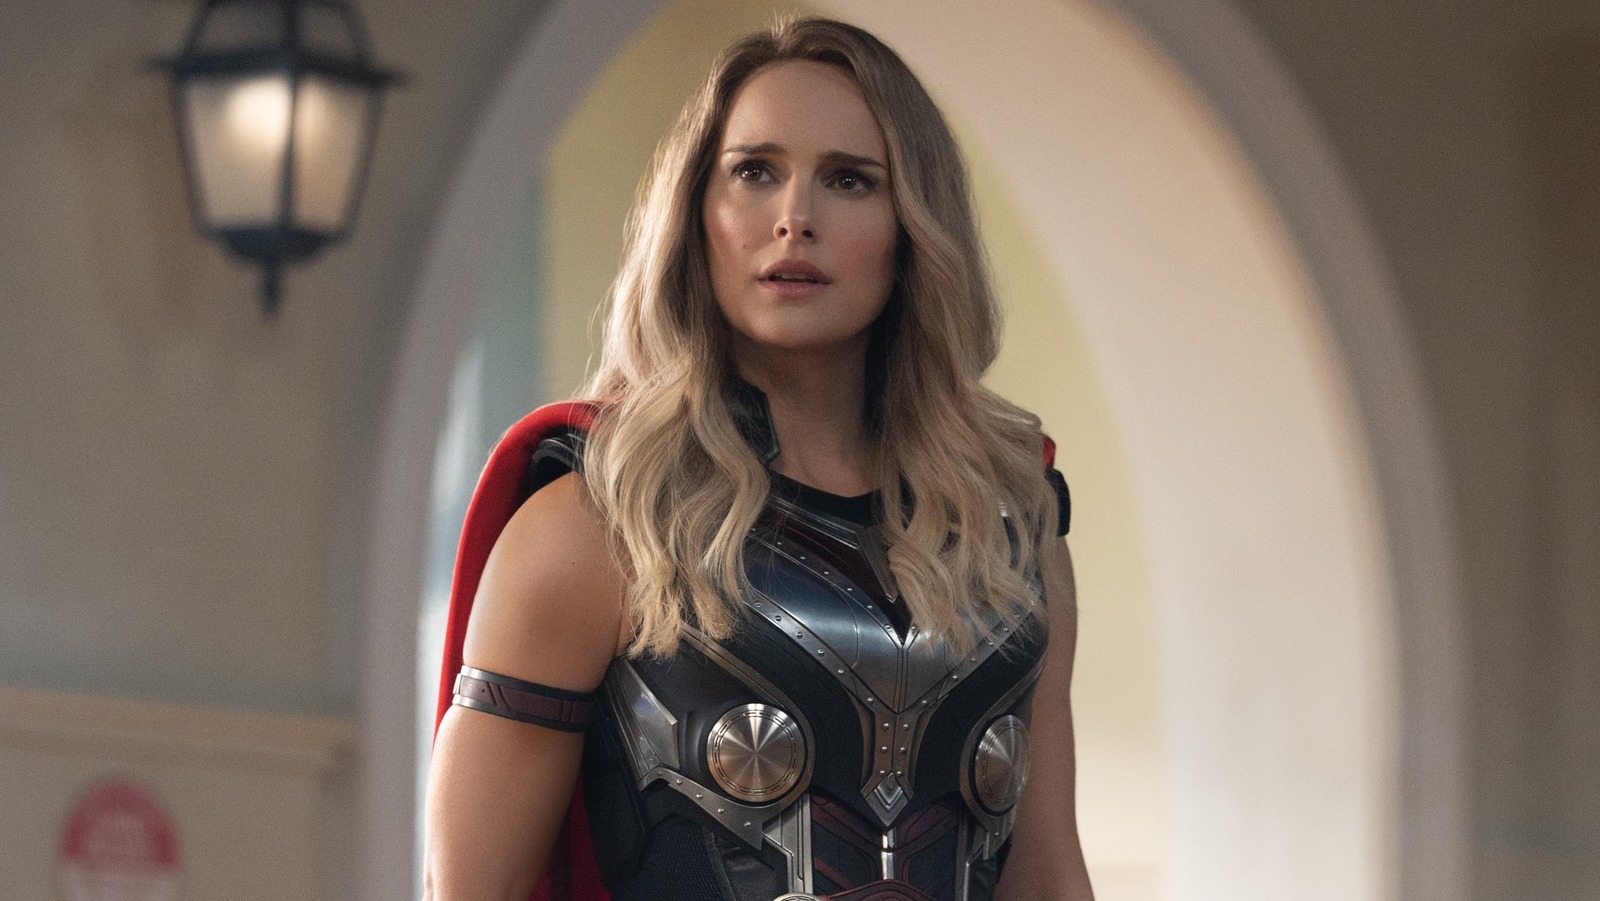 Thor: Love and Thunder Review - Marvel's $250 Million Dollar Blunder